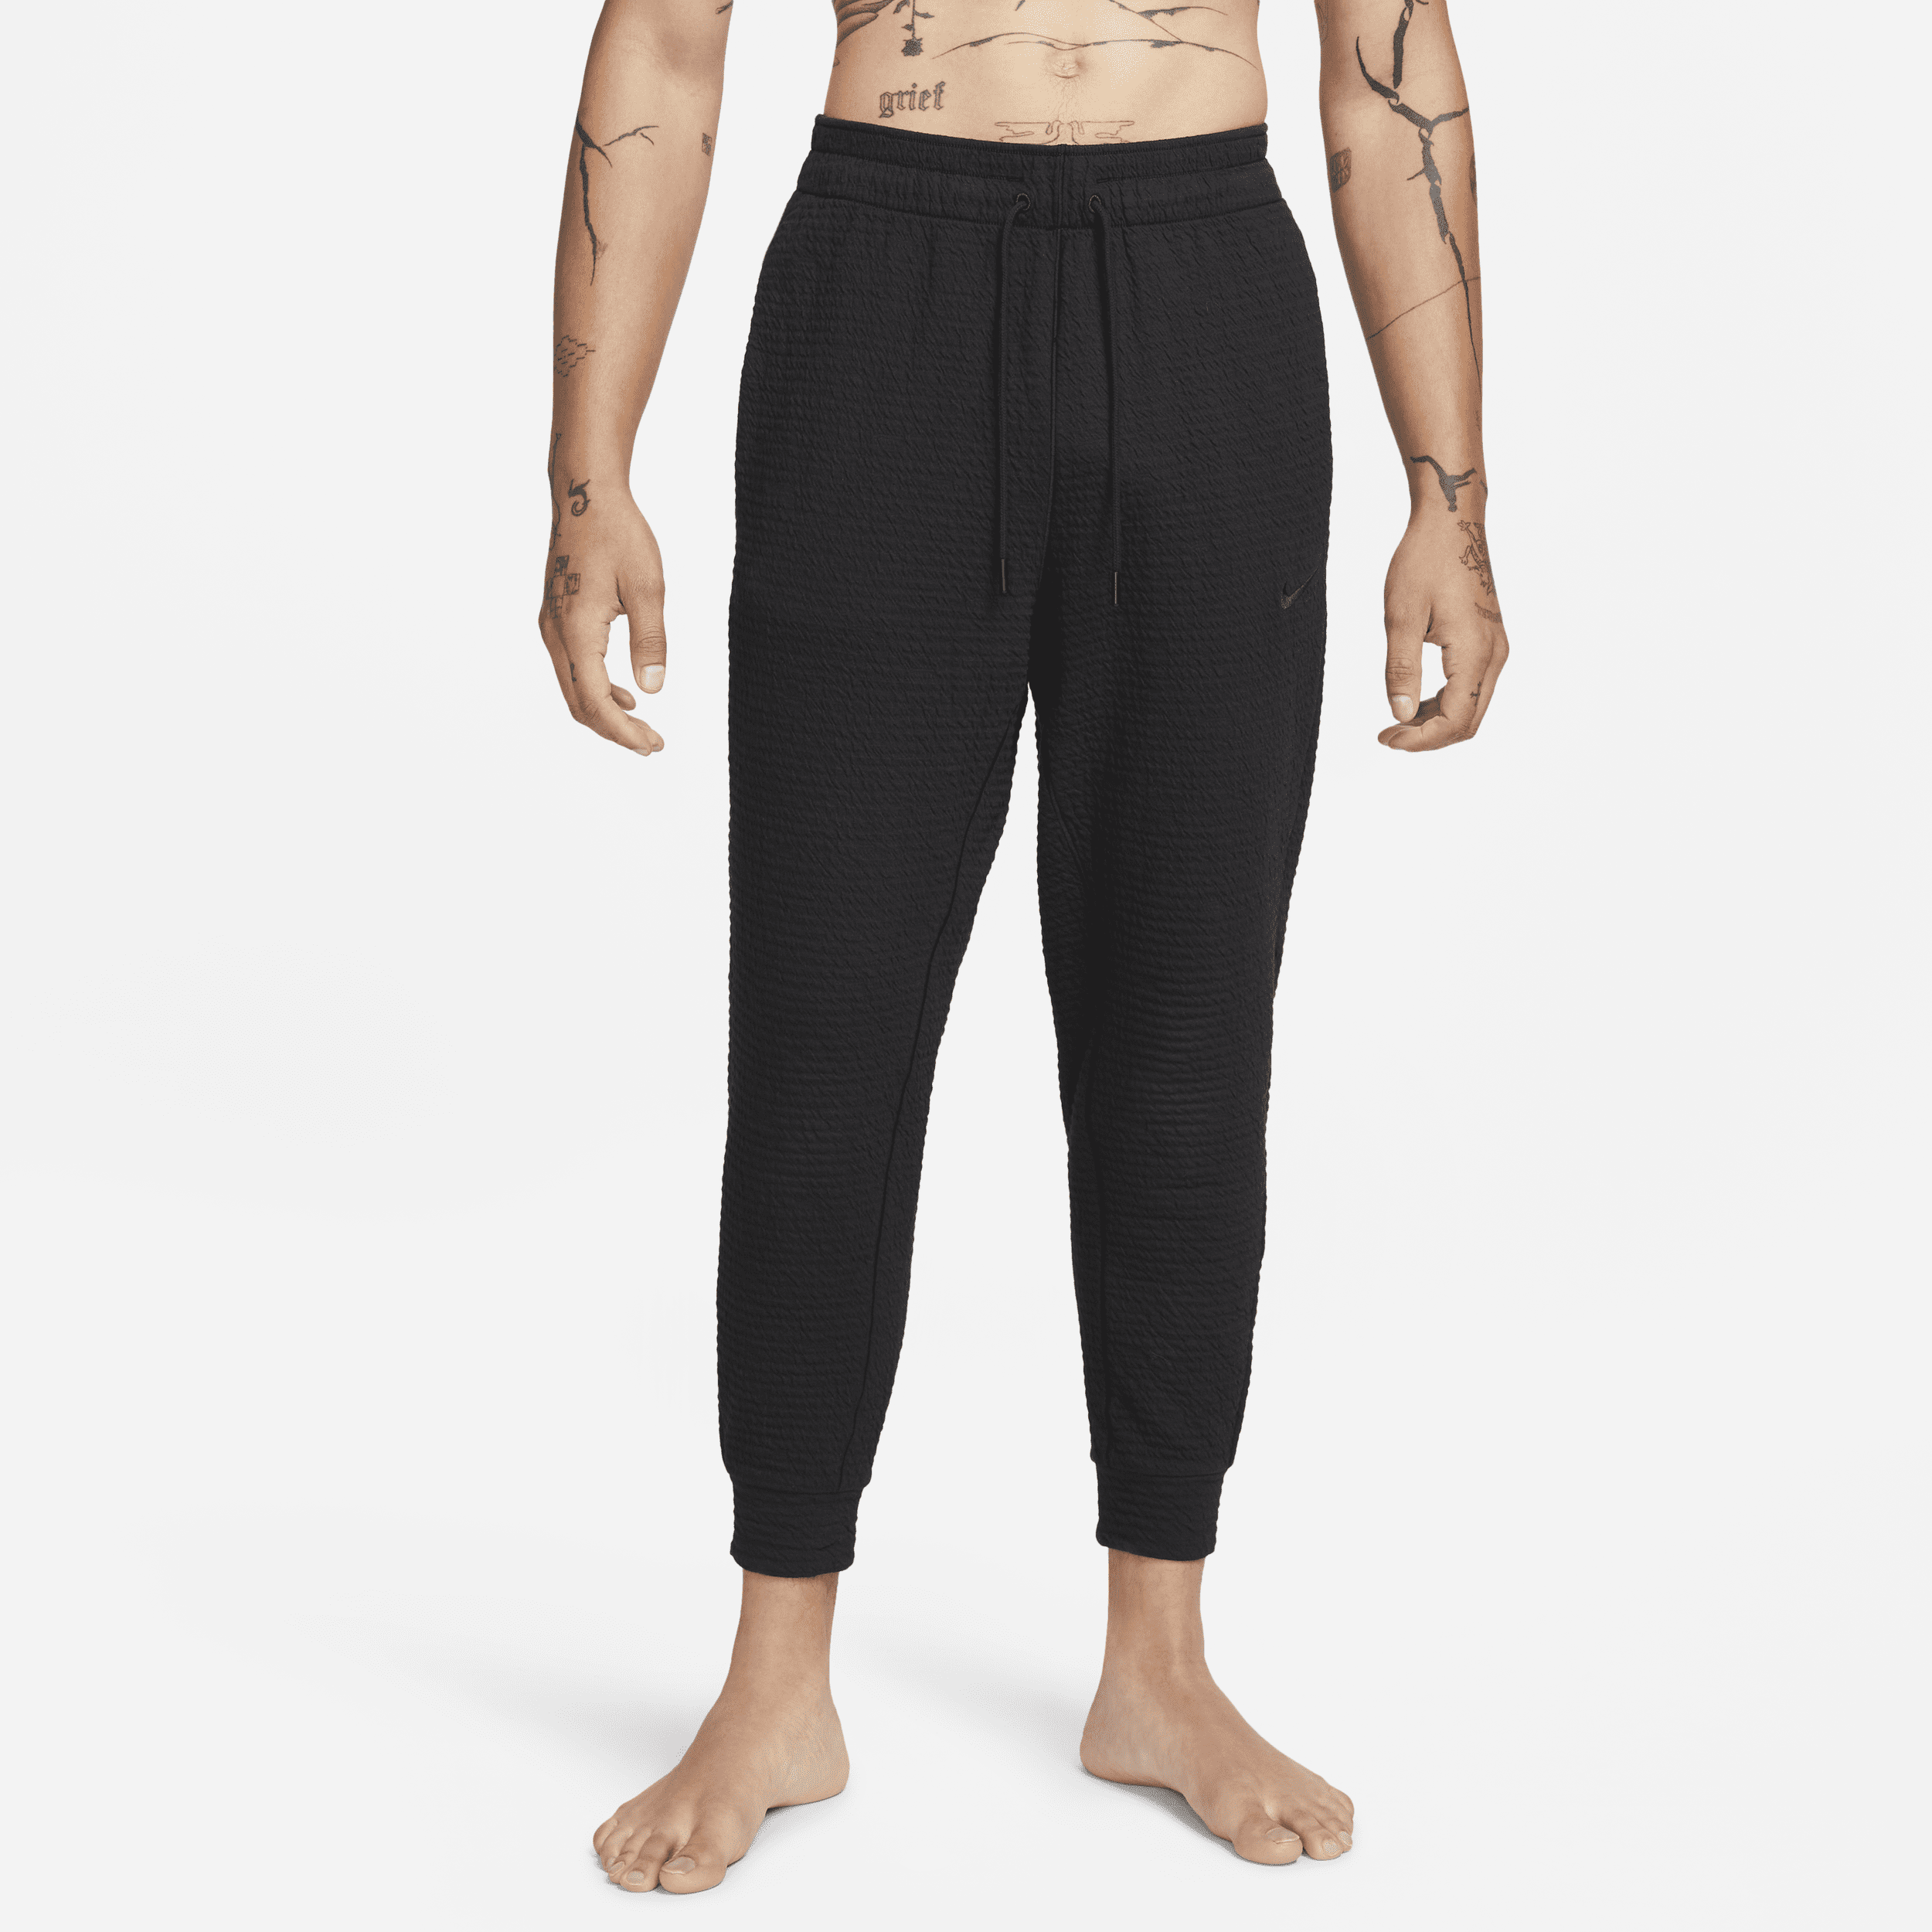 Pantaloni Dri-FIT Nike Yoga – Uomo - Nero